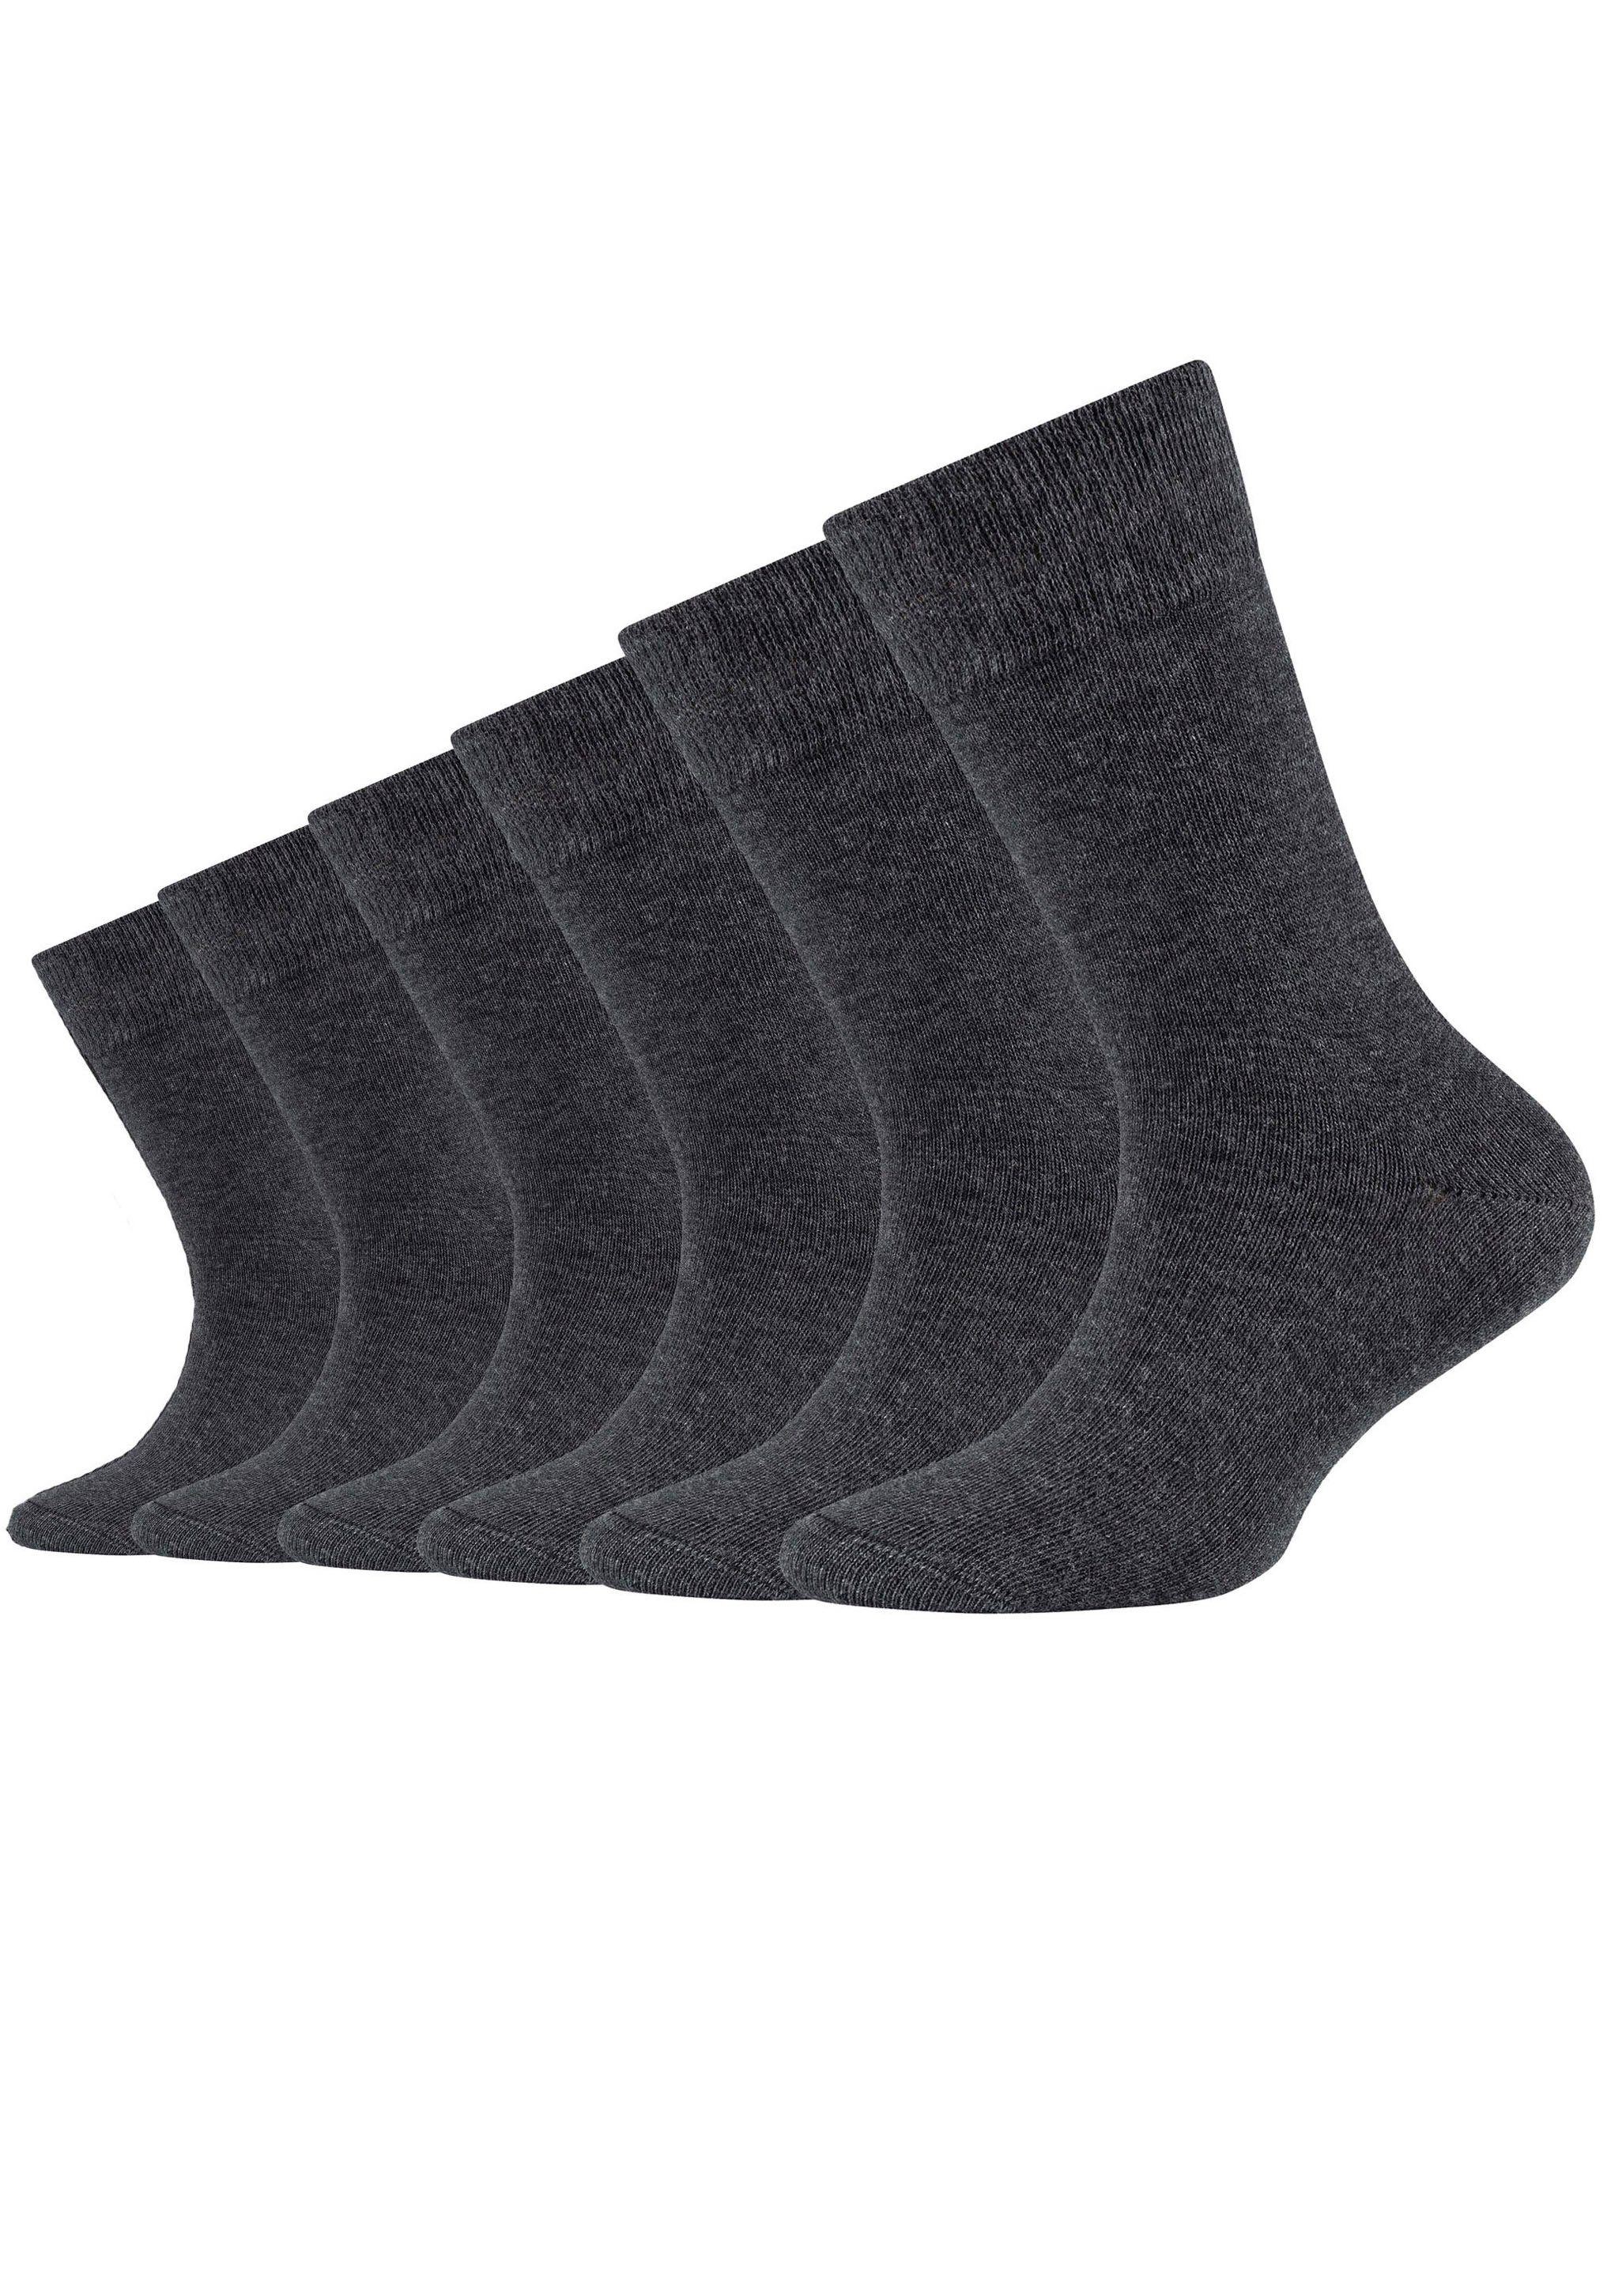 Camano Socken Besonders und bequem an Baumwolle, (Packung, Zehenspitze Anteil Ferse gekämmter Hoher 6-Paar) dank verstärkter